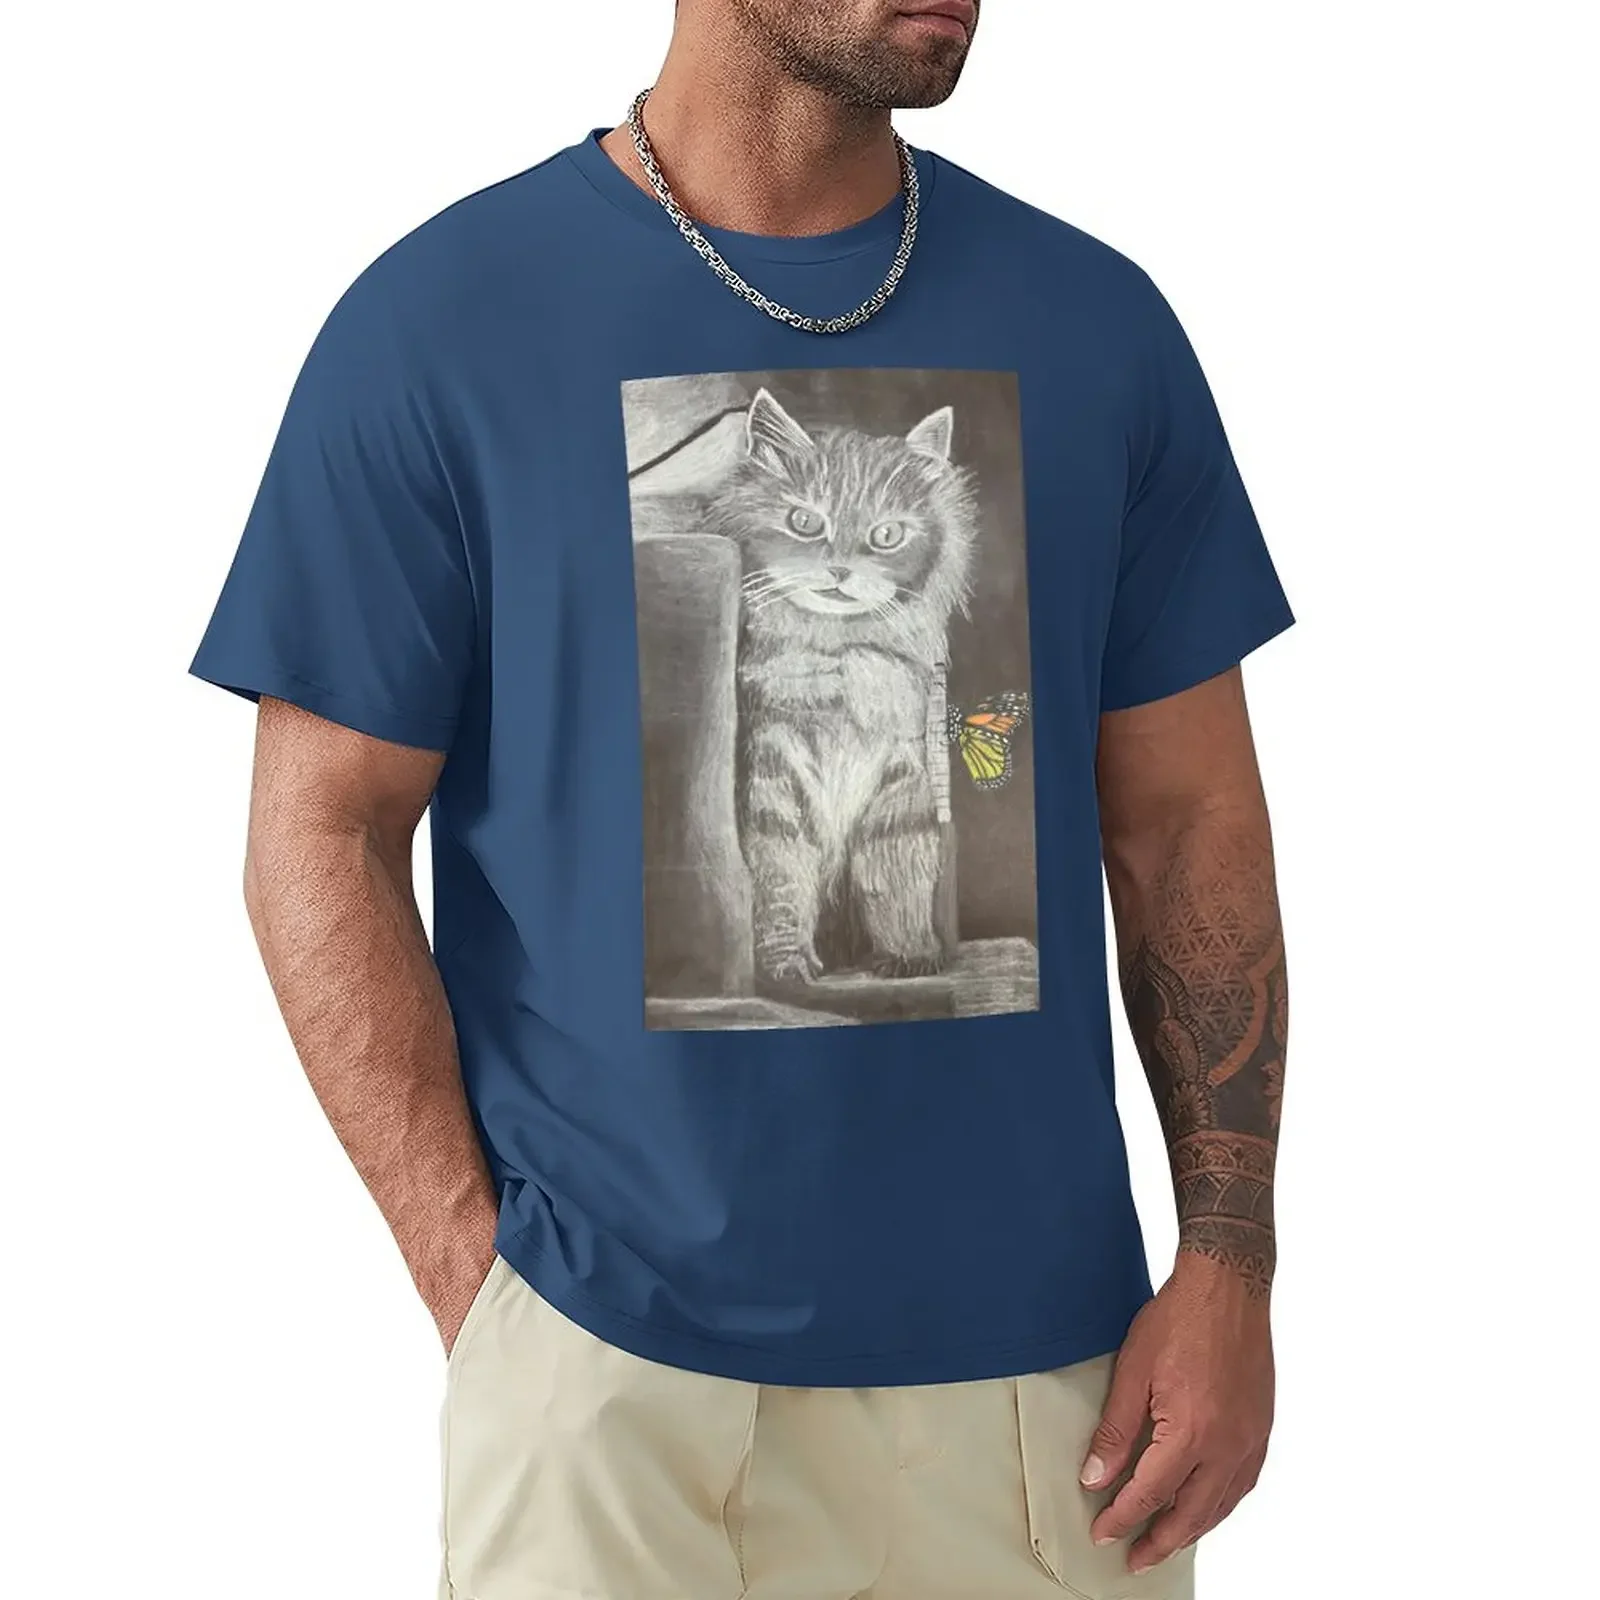 

Cat T-Shirt aesthetic clothes anime animal prinfor boys Men's t-shirt sweat blanks Short sleeve tee oversized t shirts for men